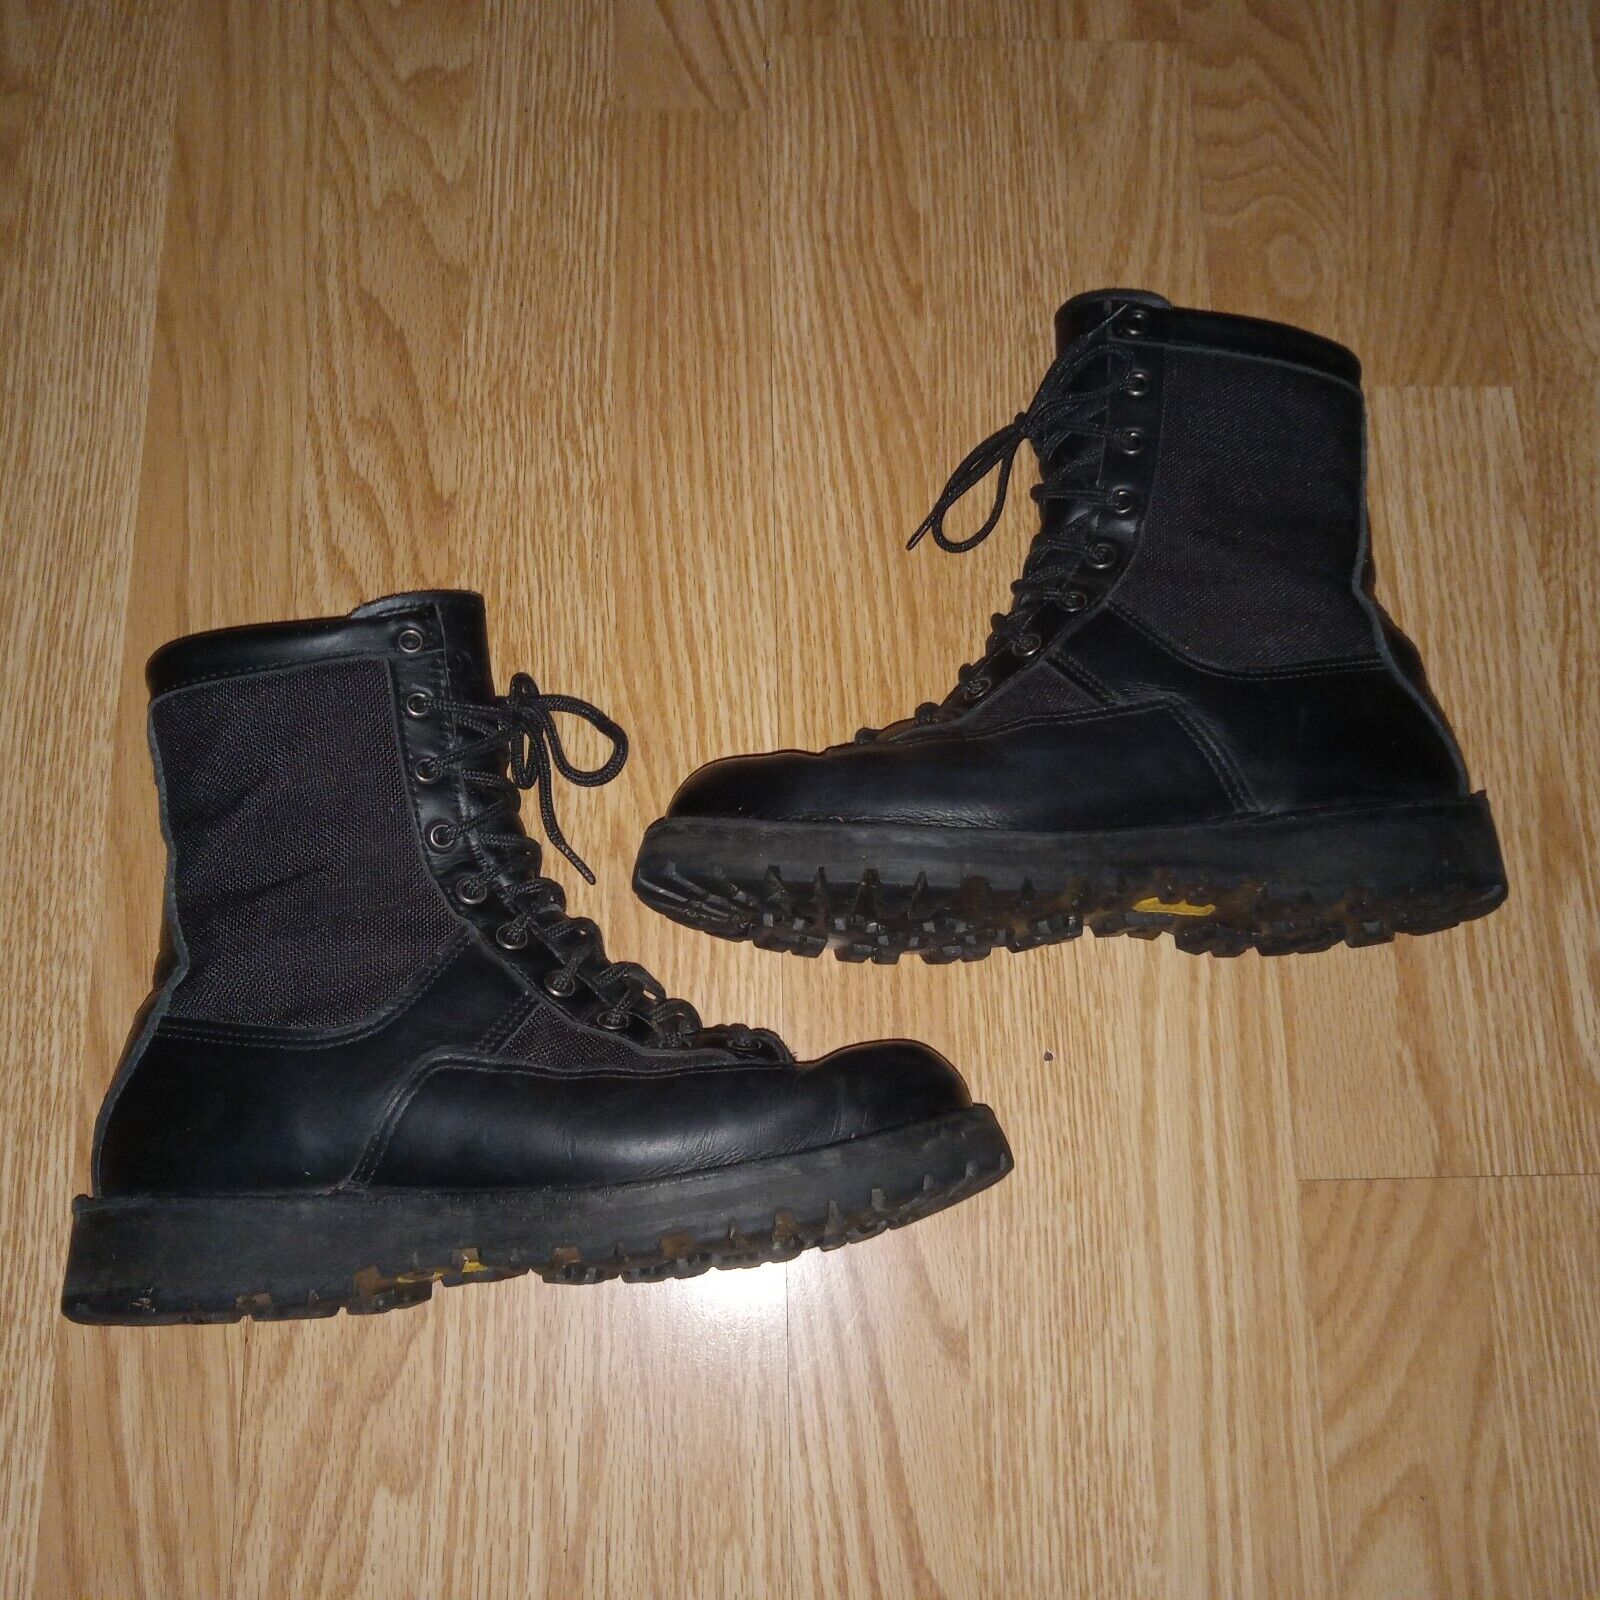 DANNER ACADIA 69210 Boots Mens Size 9.5 D Vibram Gore Tex Insulated Combat Black